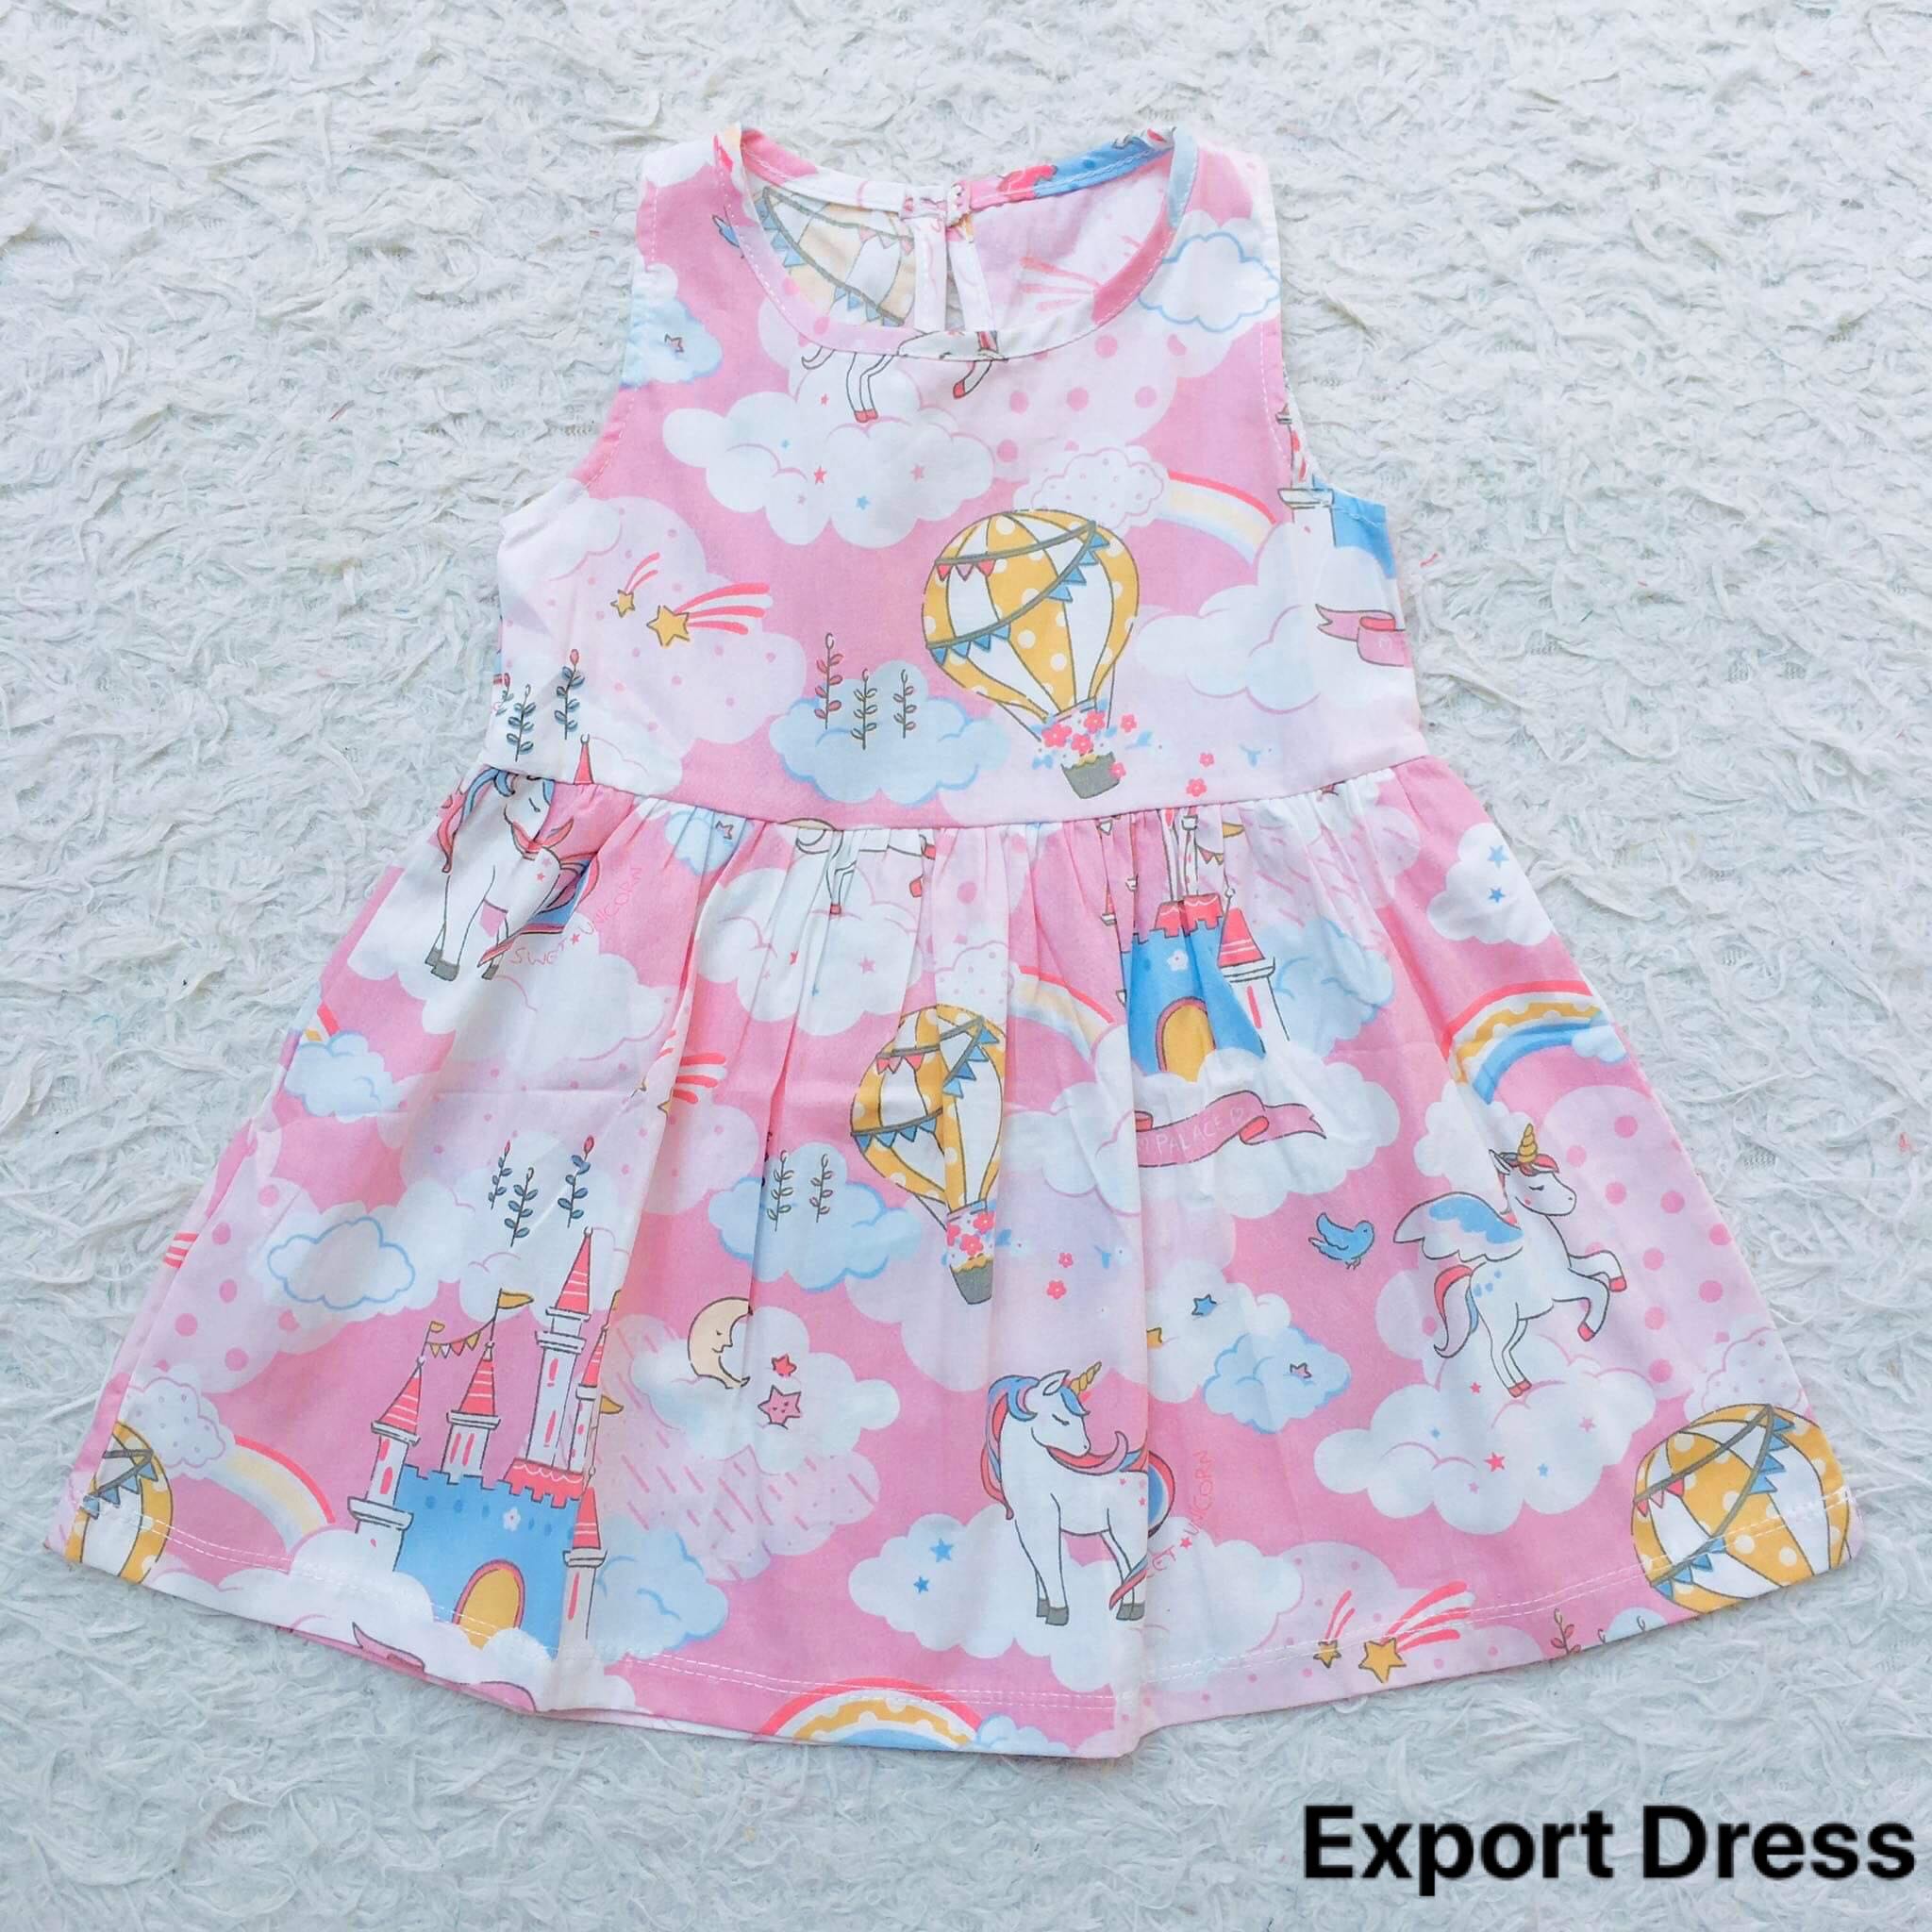 Export Dress